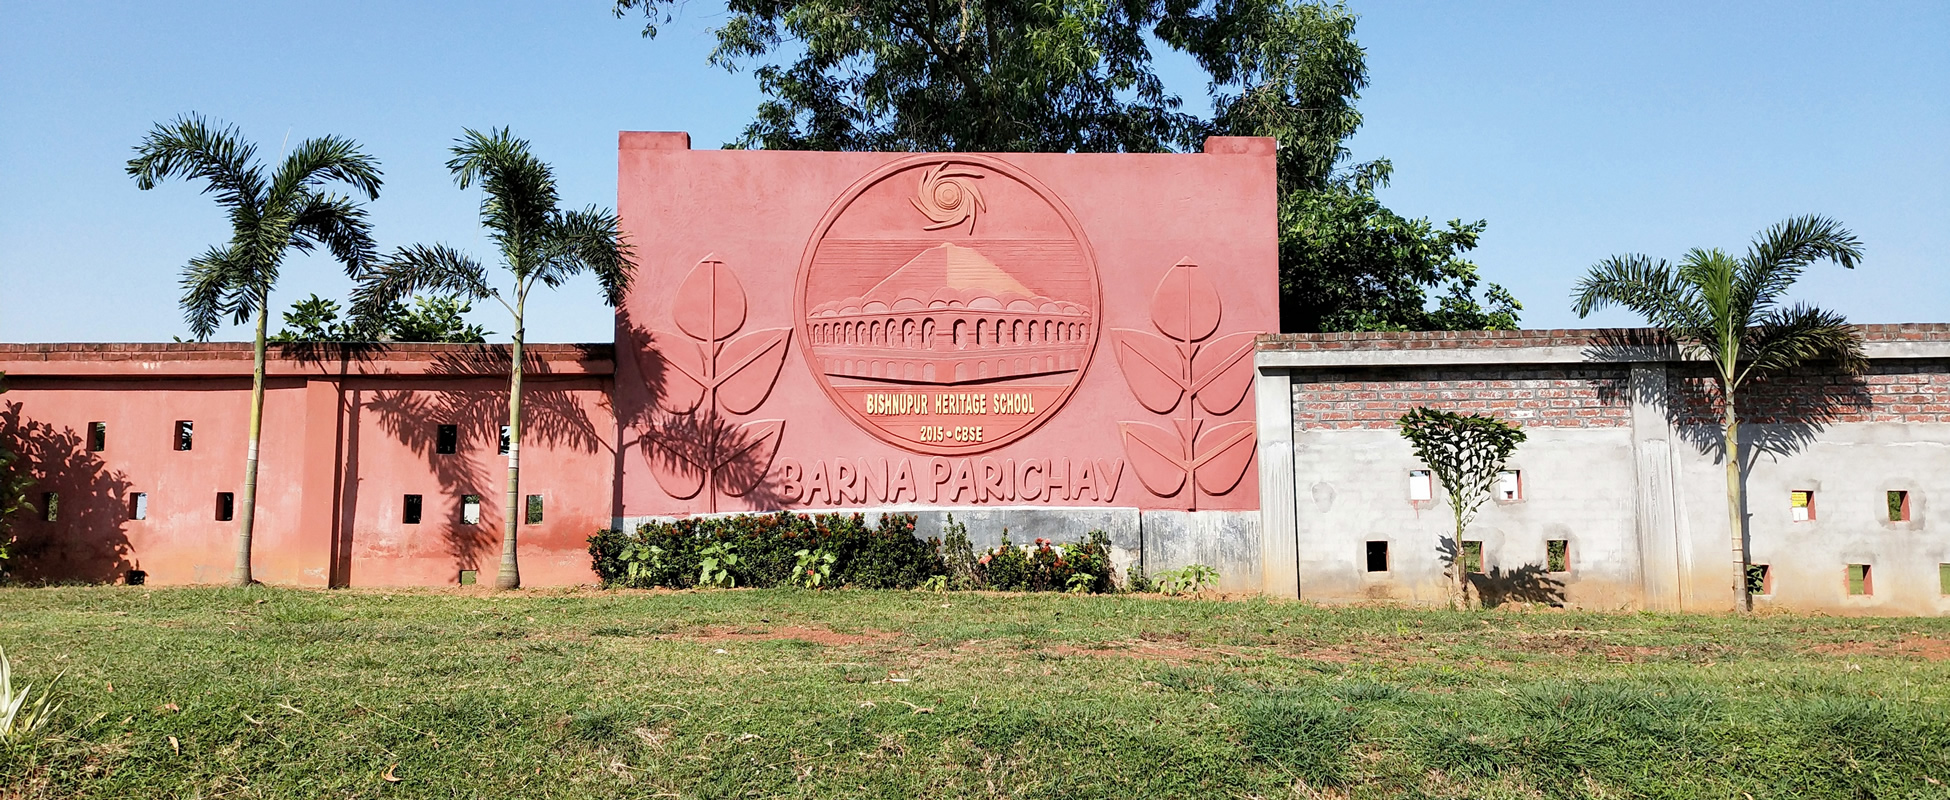 Bishnupur Heritage School